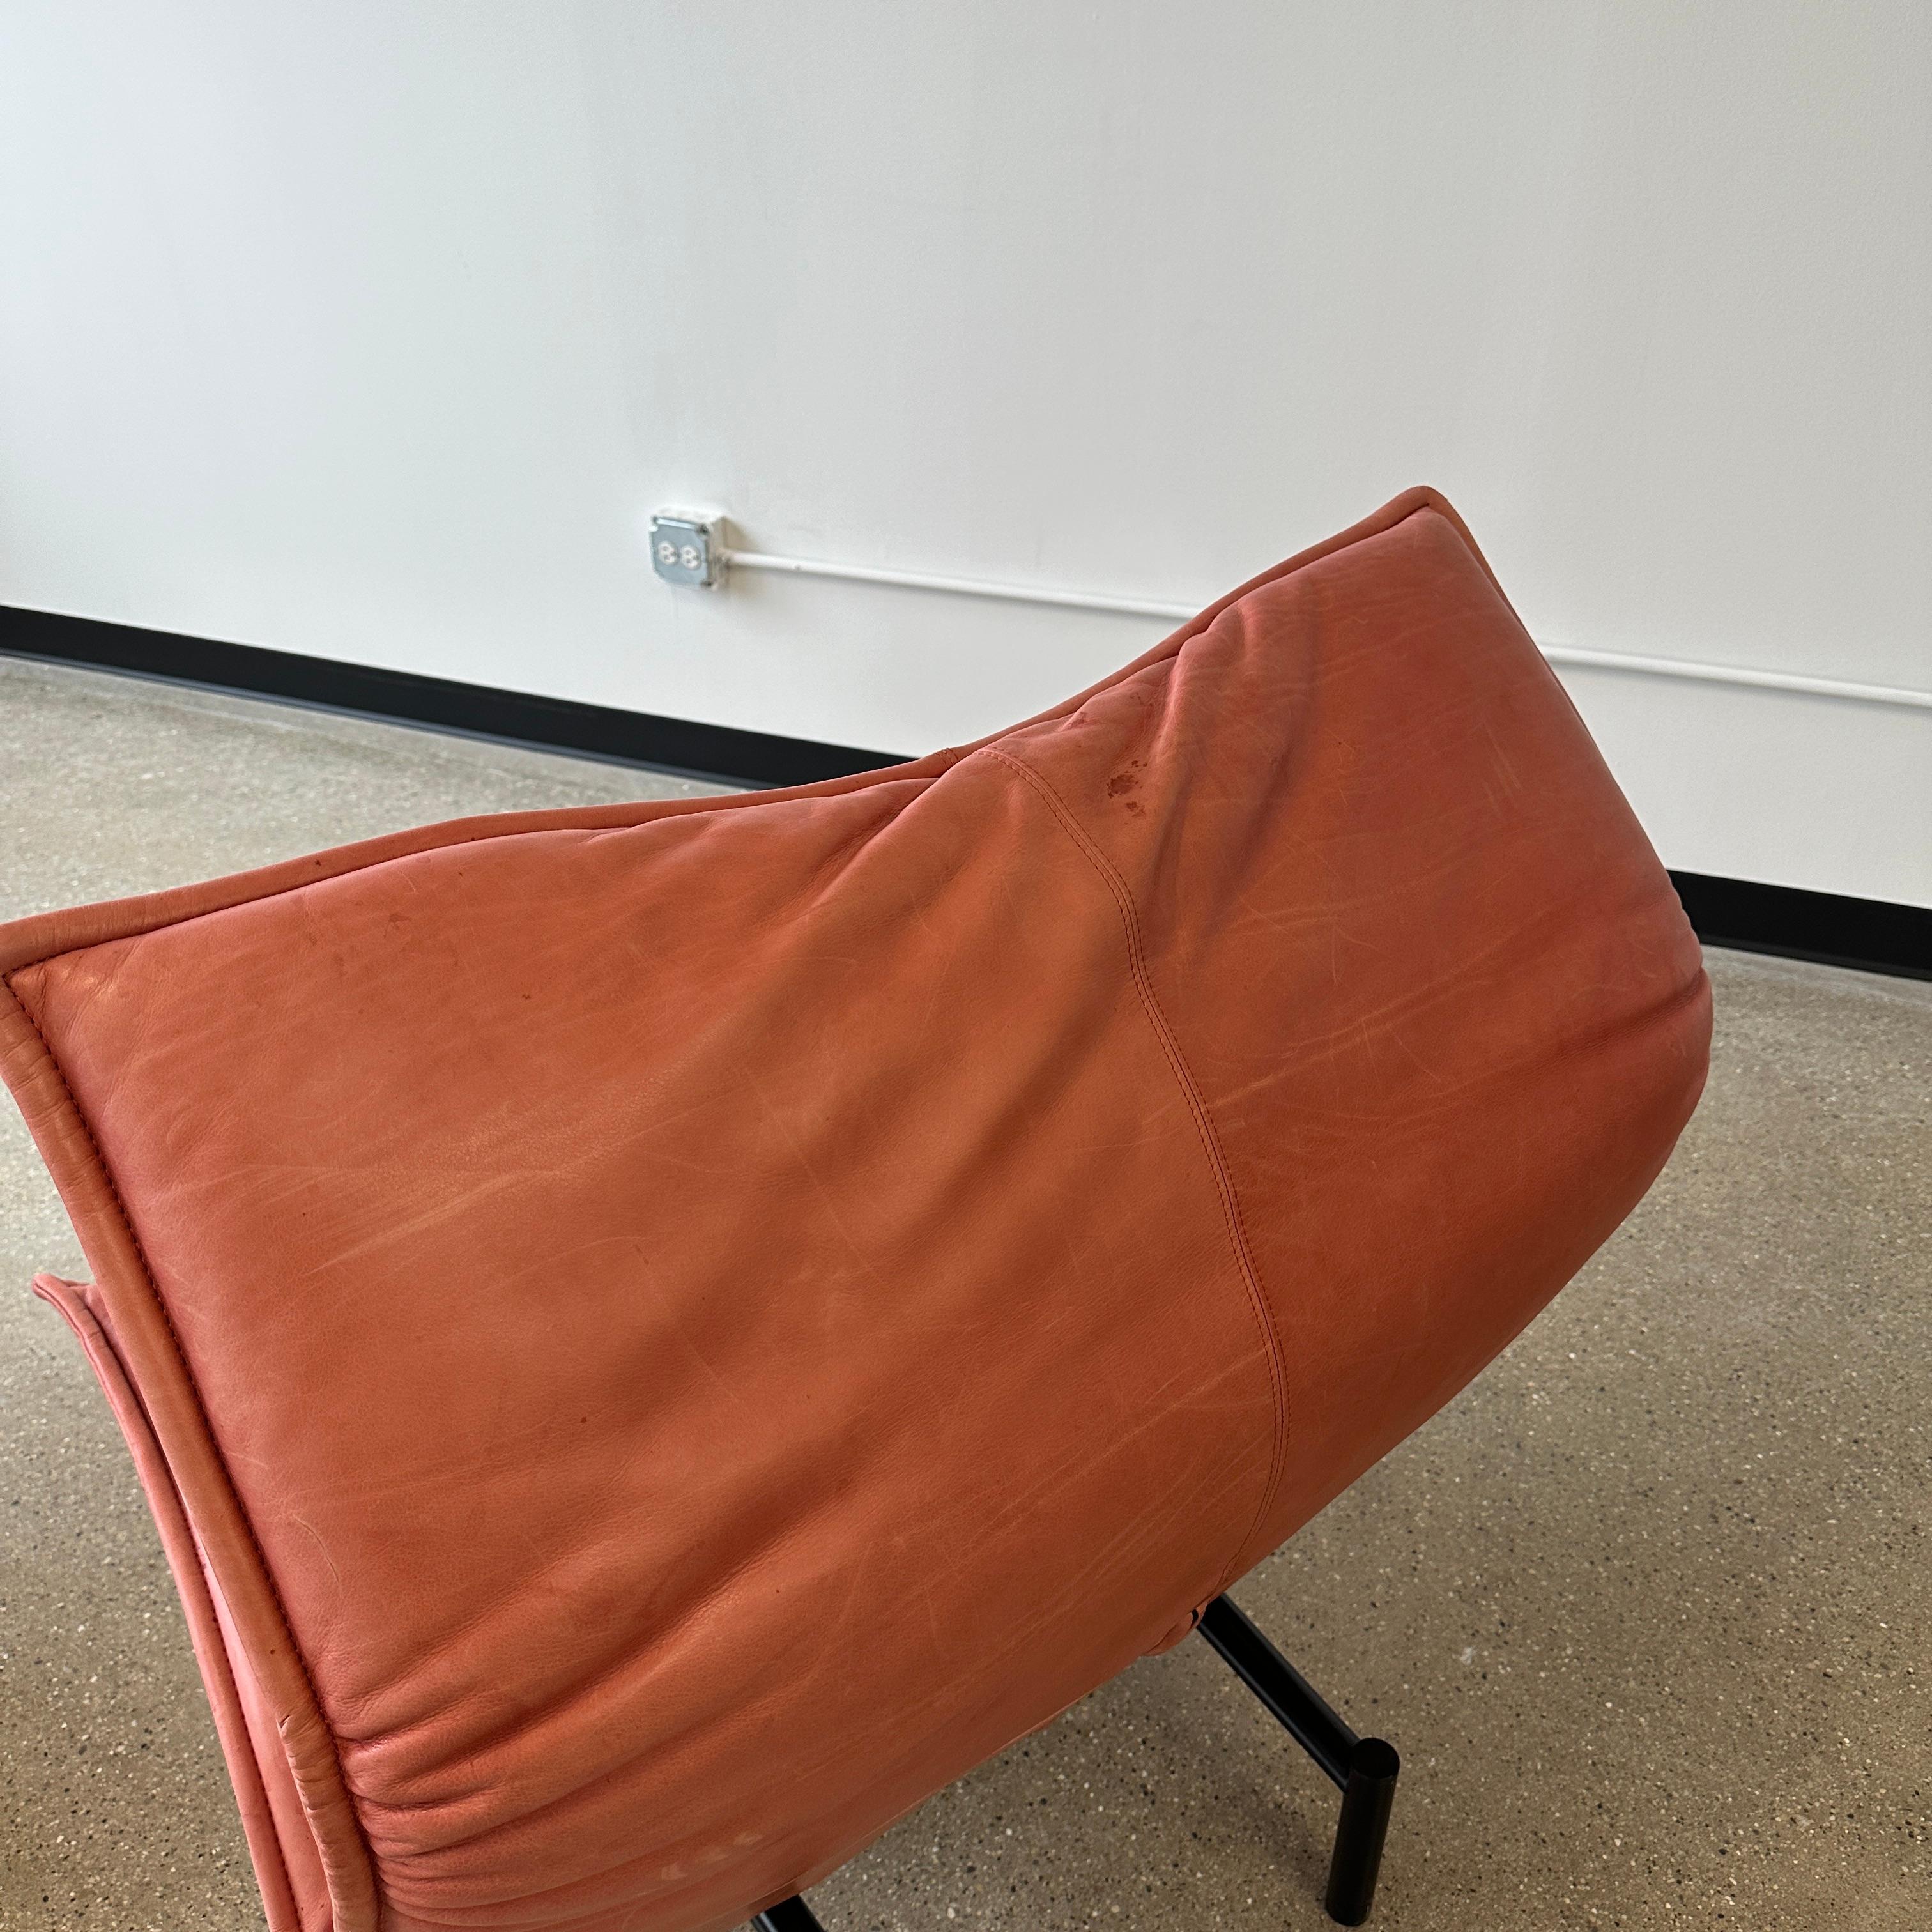 Vico Magistretti “Veranda” Chairs, a pair For Sale 1